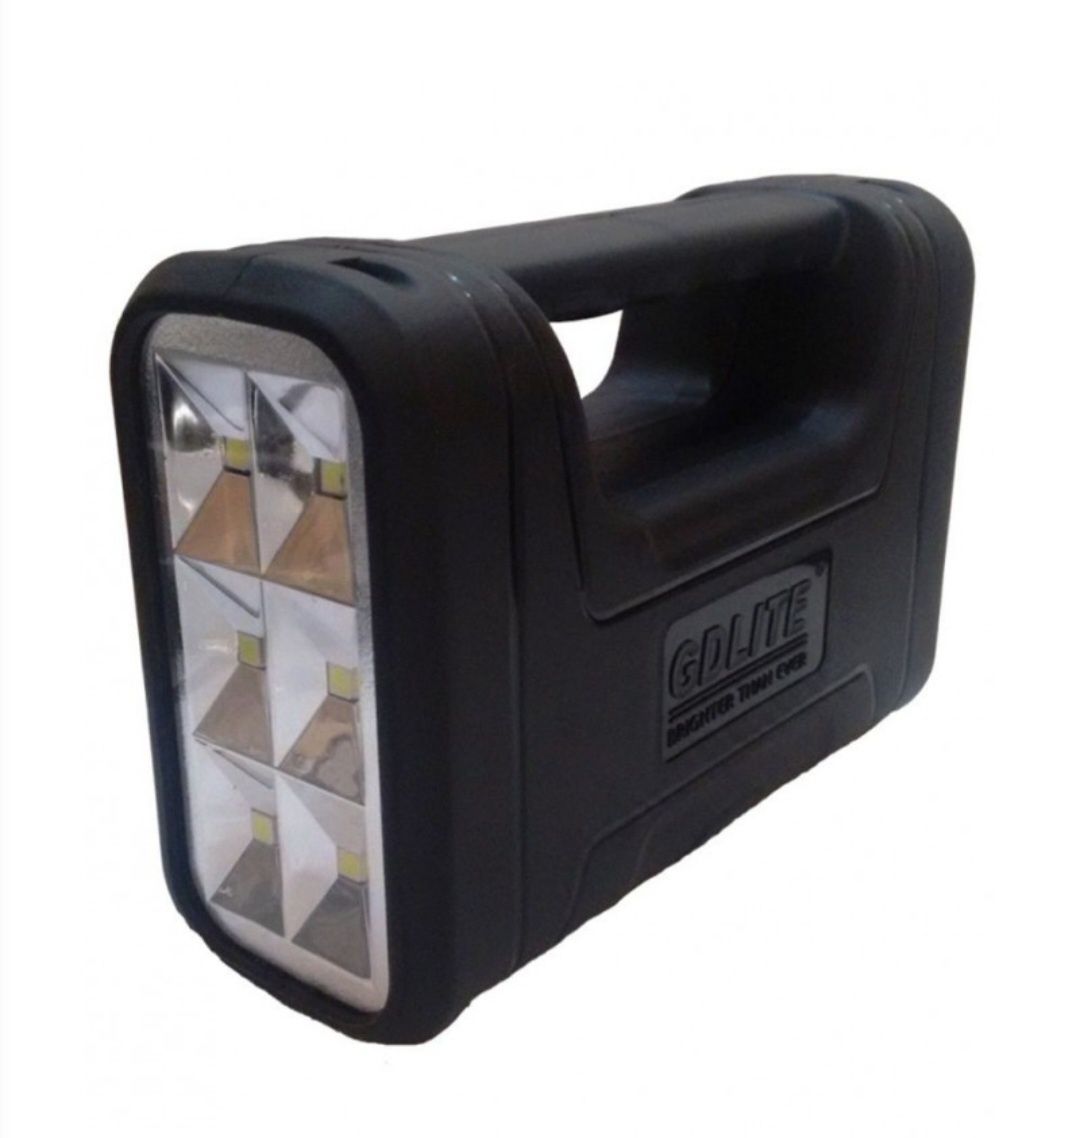 Kit/Panou Solar de iluminat GD-8017-A USB becuri led 6V 4ah